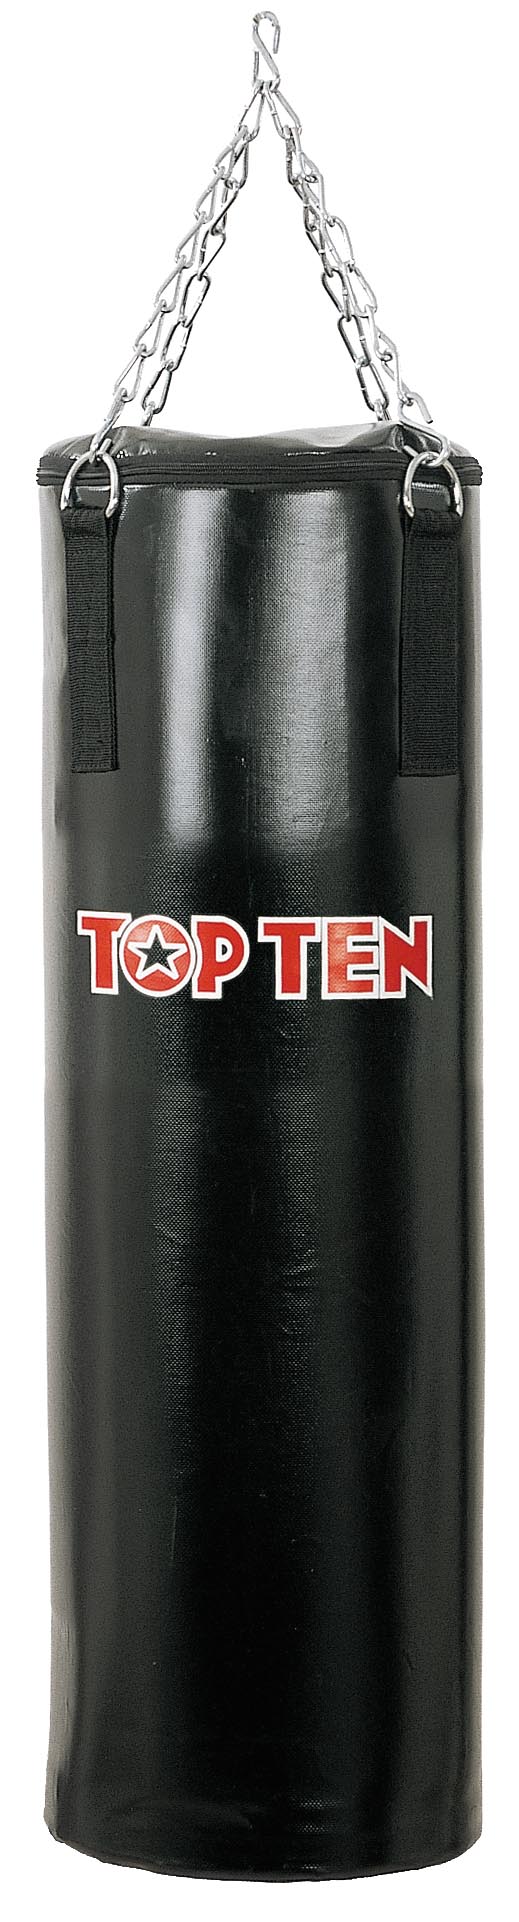 Water bag Top Ten Aqua Force, 1101-100